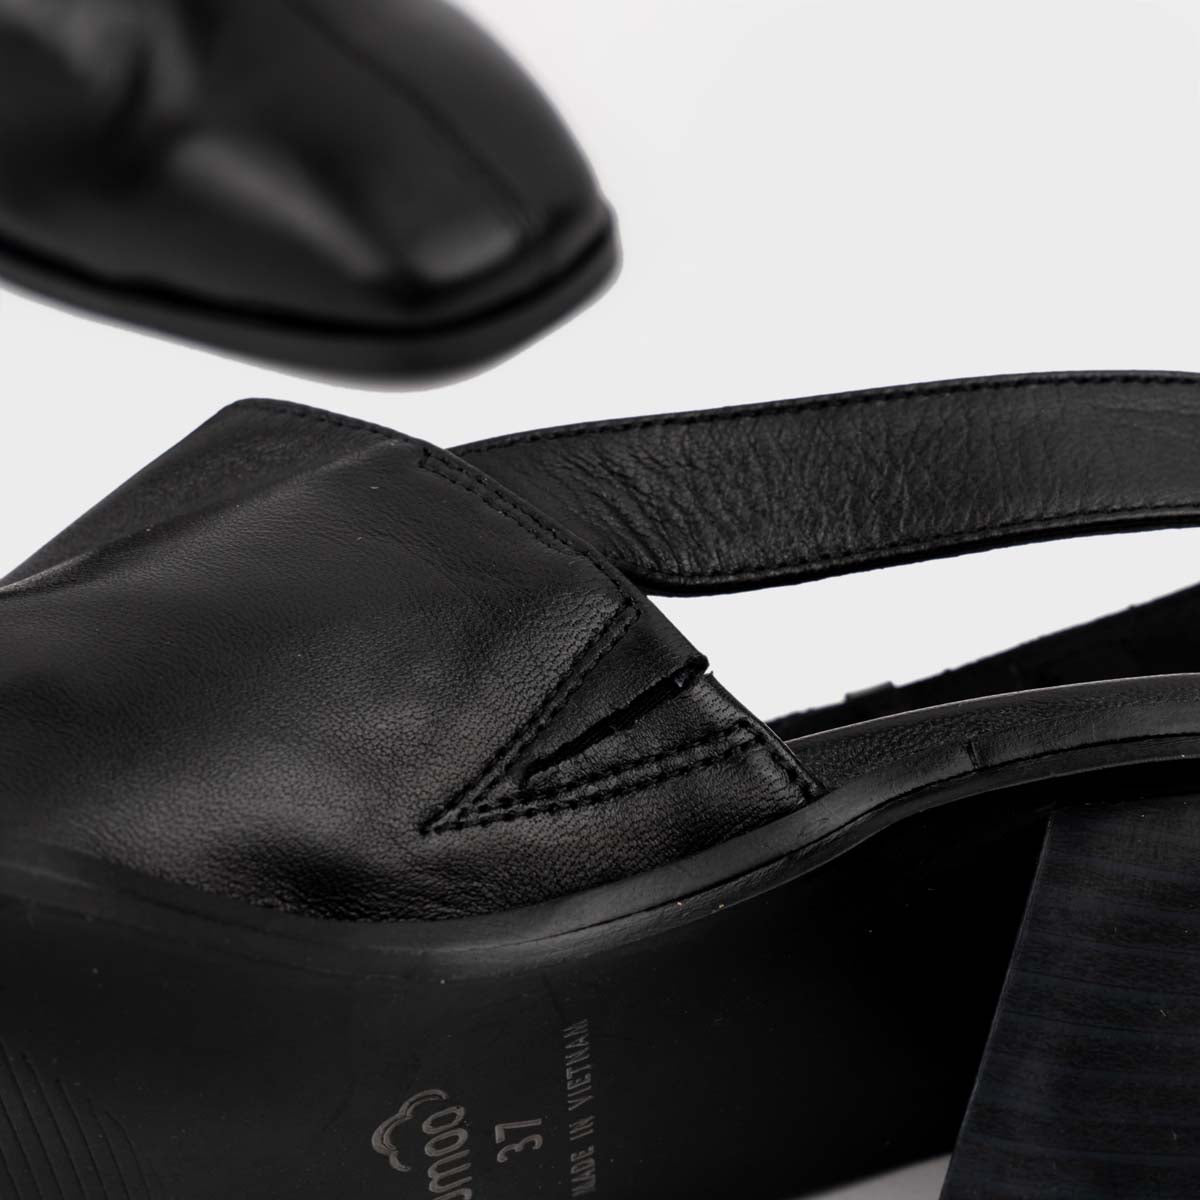 Giày Cao Gót - Laure Retro Heels (Đen) Mã GCG-KUMO-008